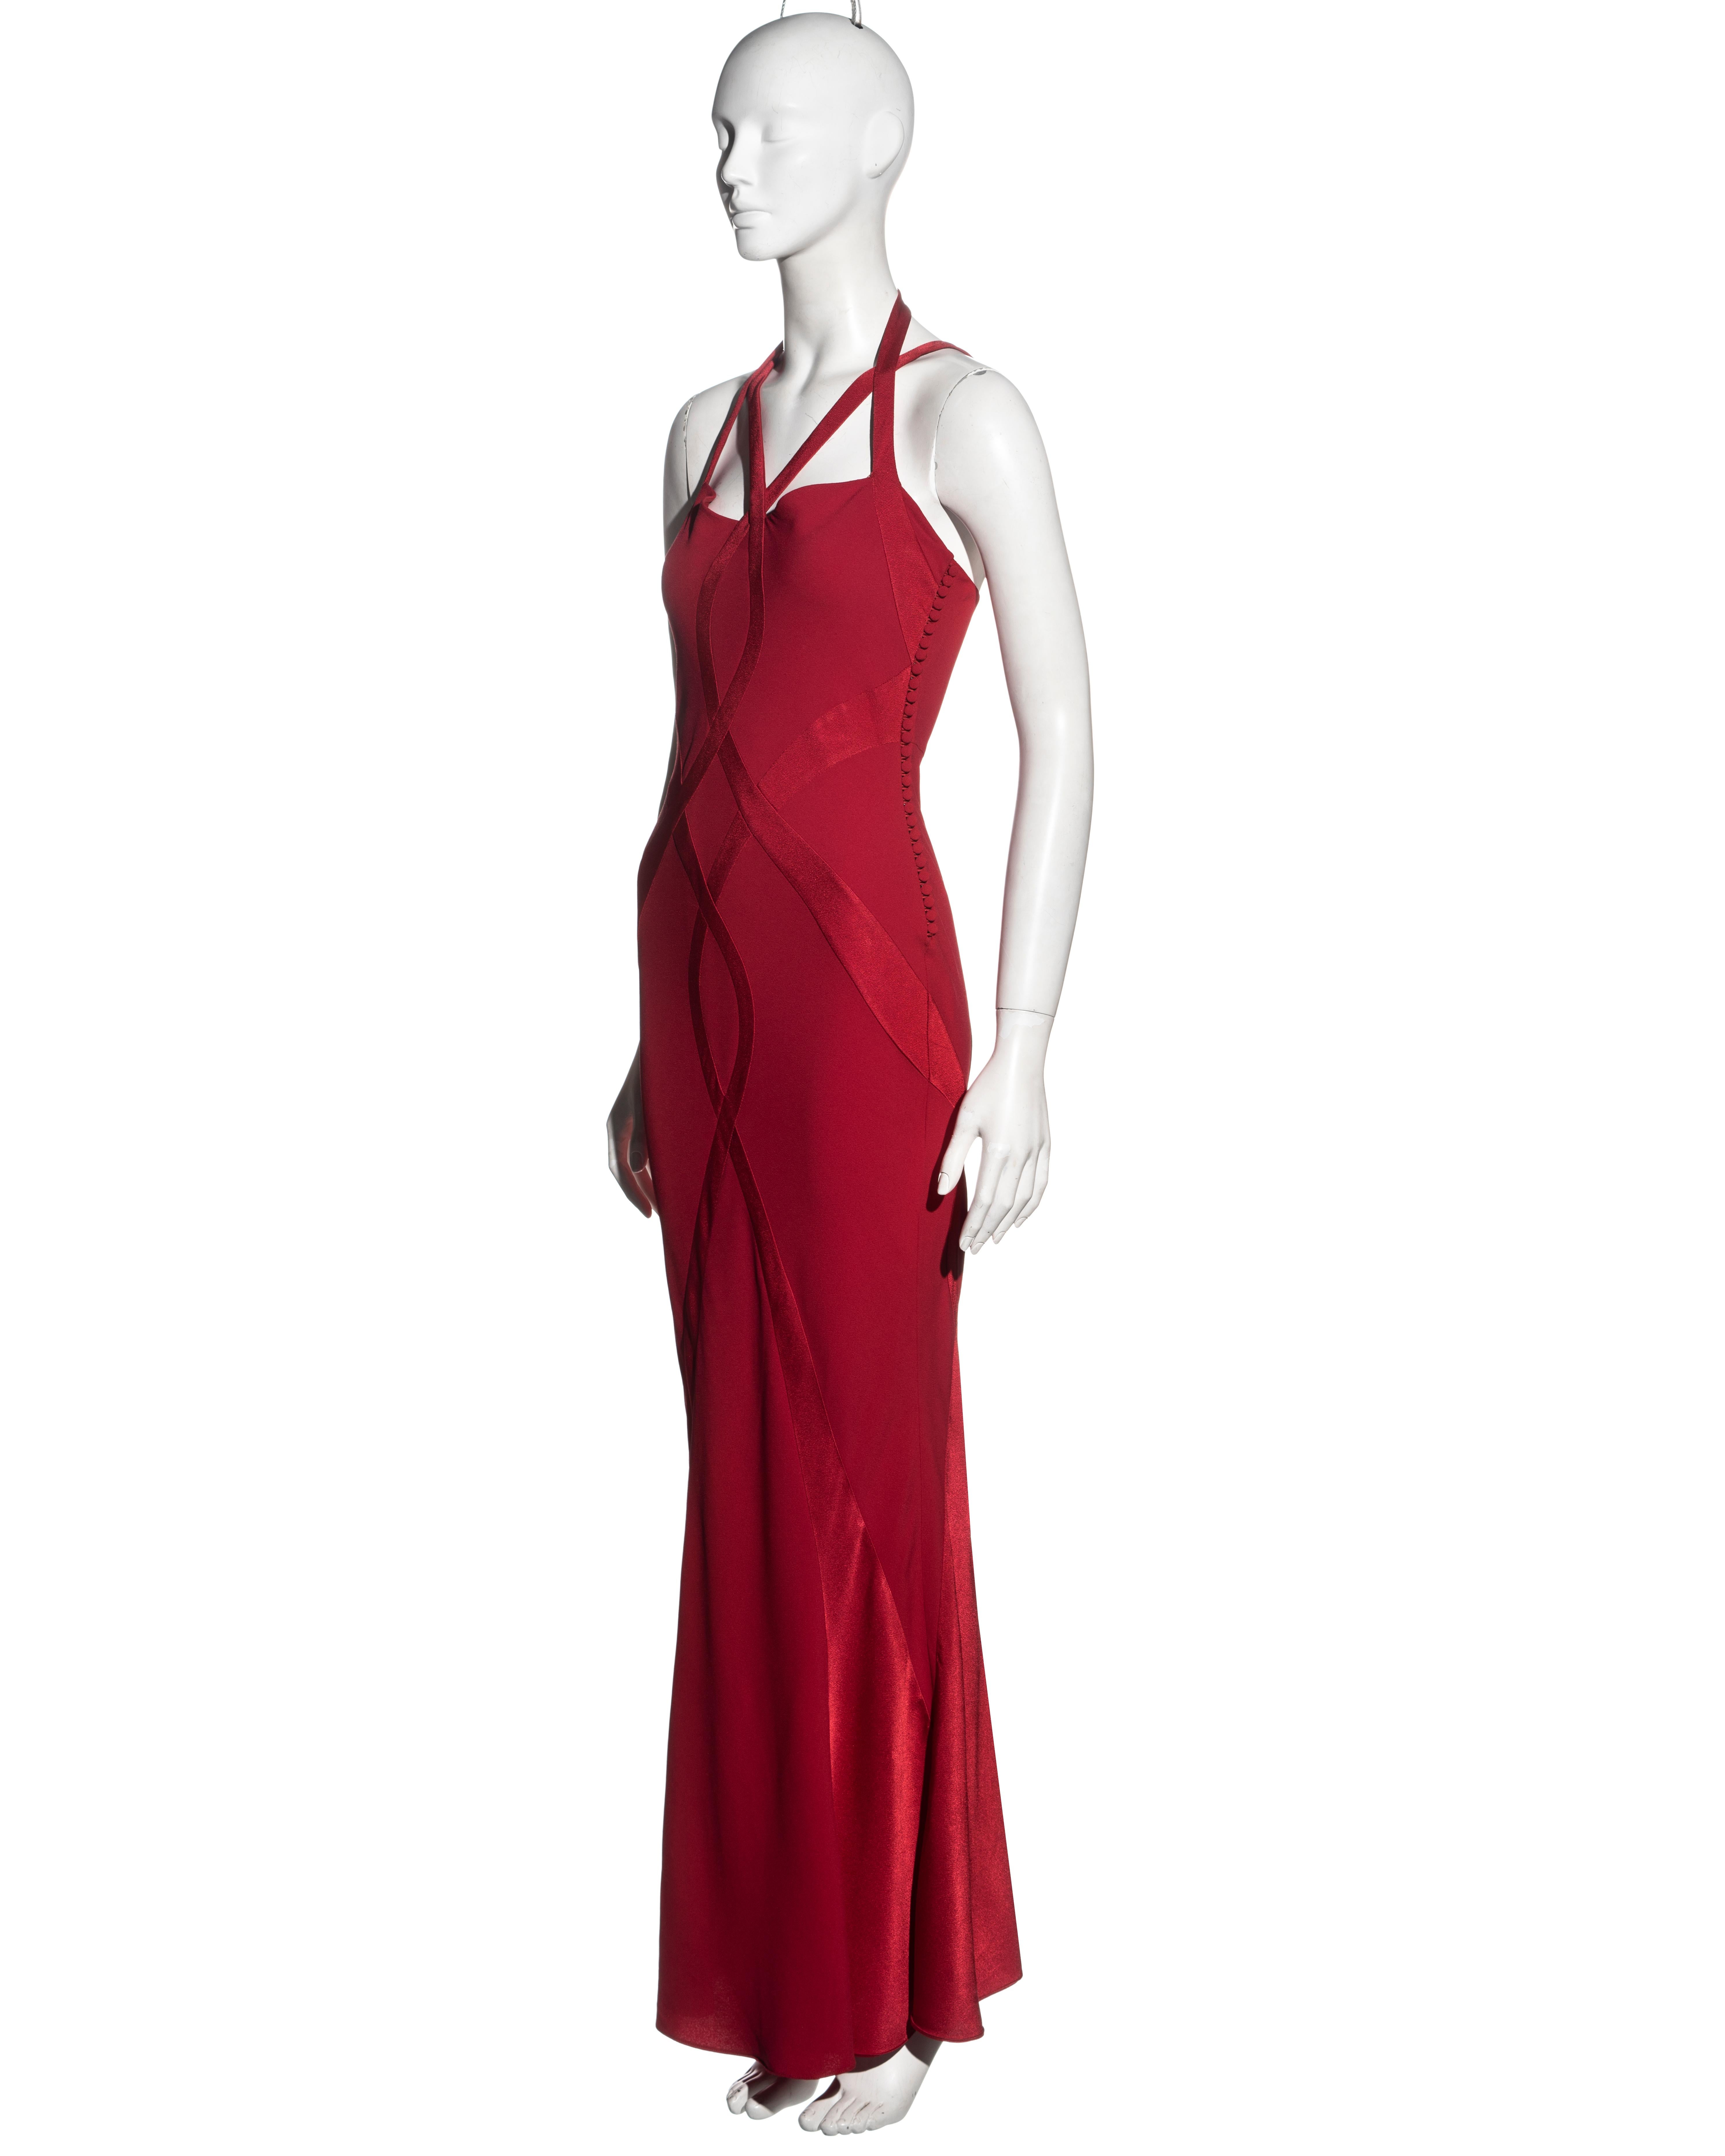 Women's Christian Dior by John Galliano red bias-cut evening dress, fw 2004 For Sale